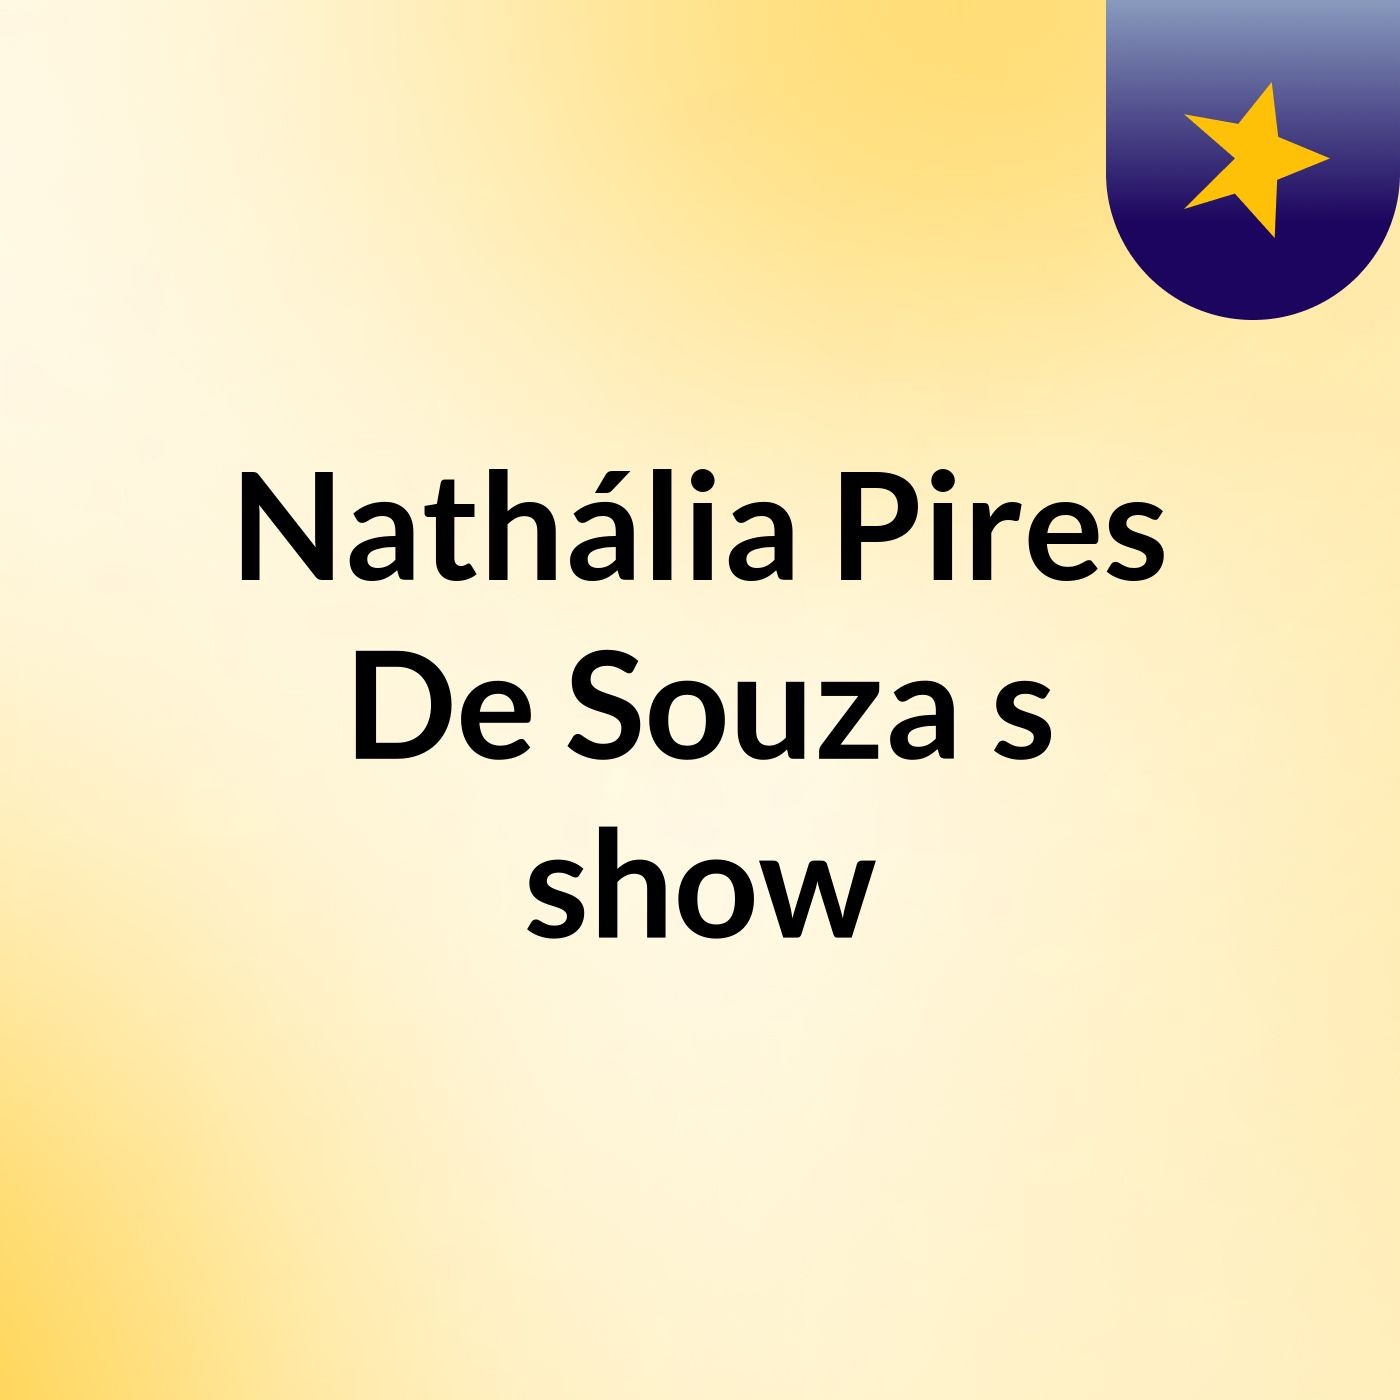 Nathália Pires De Souza's show